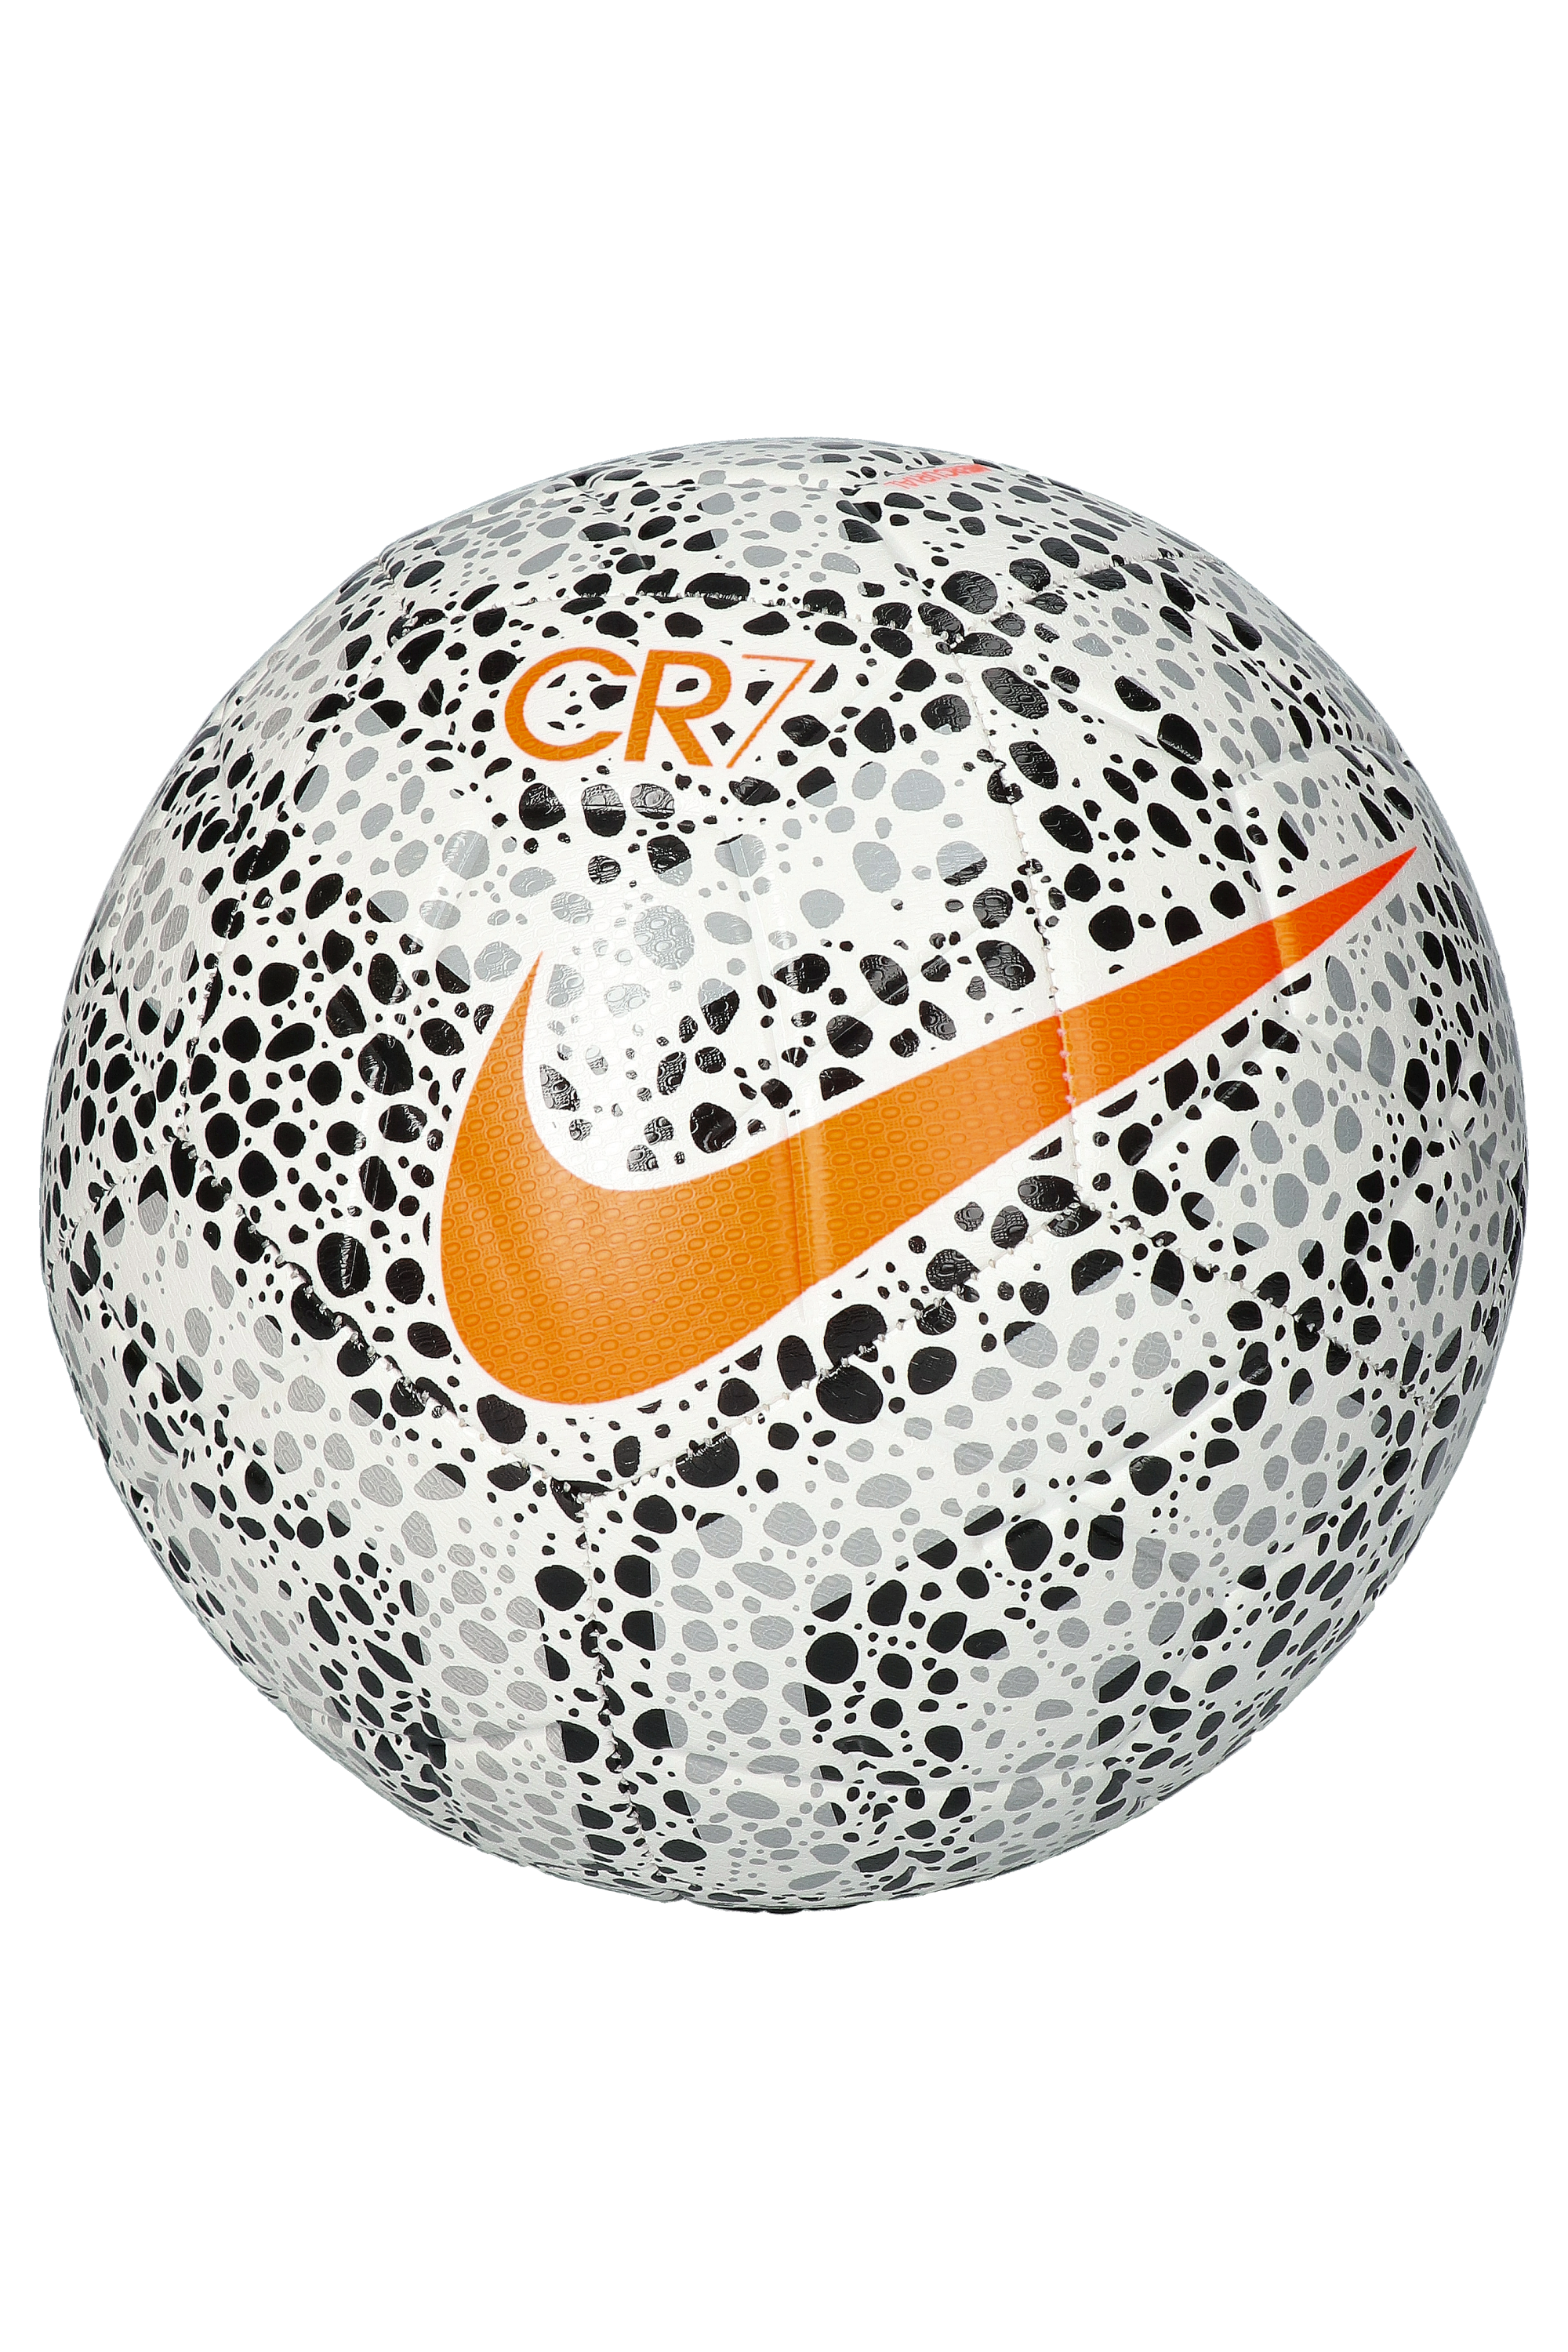 Ball Nike CR7 Strike size 4 | R-GOL.com 